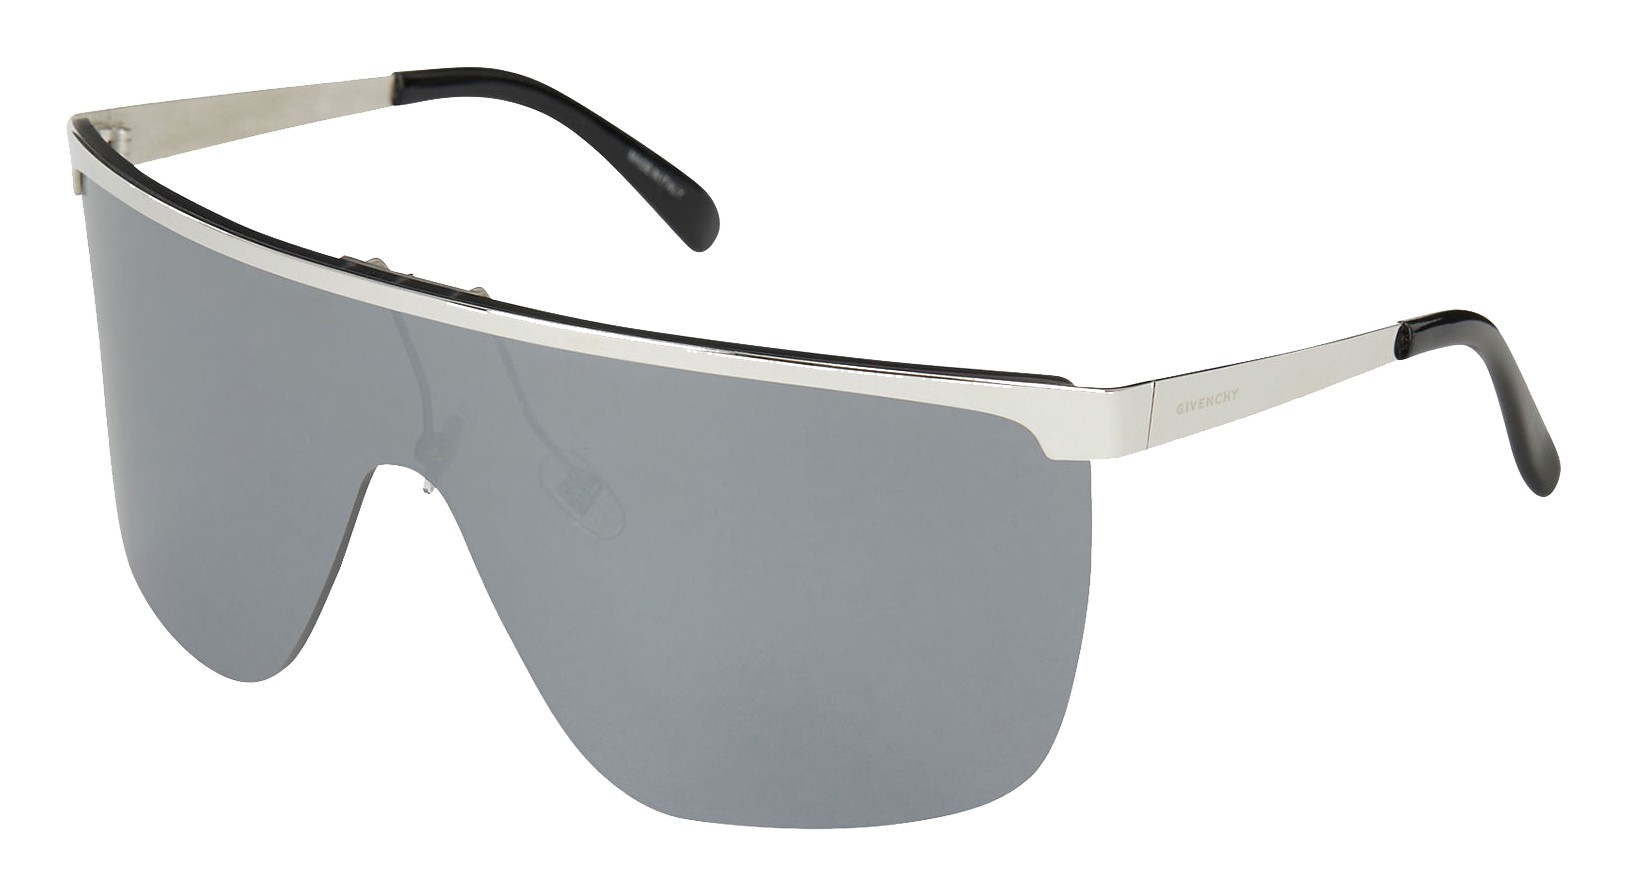 Givenchy - Mask Sunglasses with Black Flash Lenses - Sunglasses - Givenchy  Eyewear - Avvenice